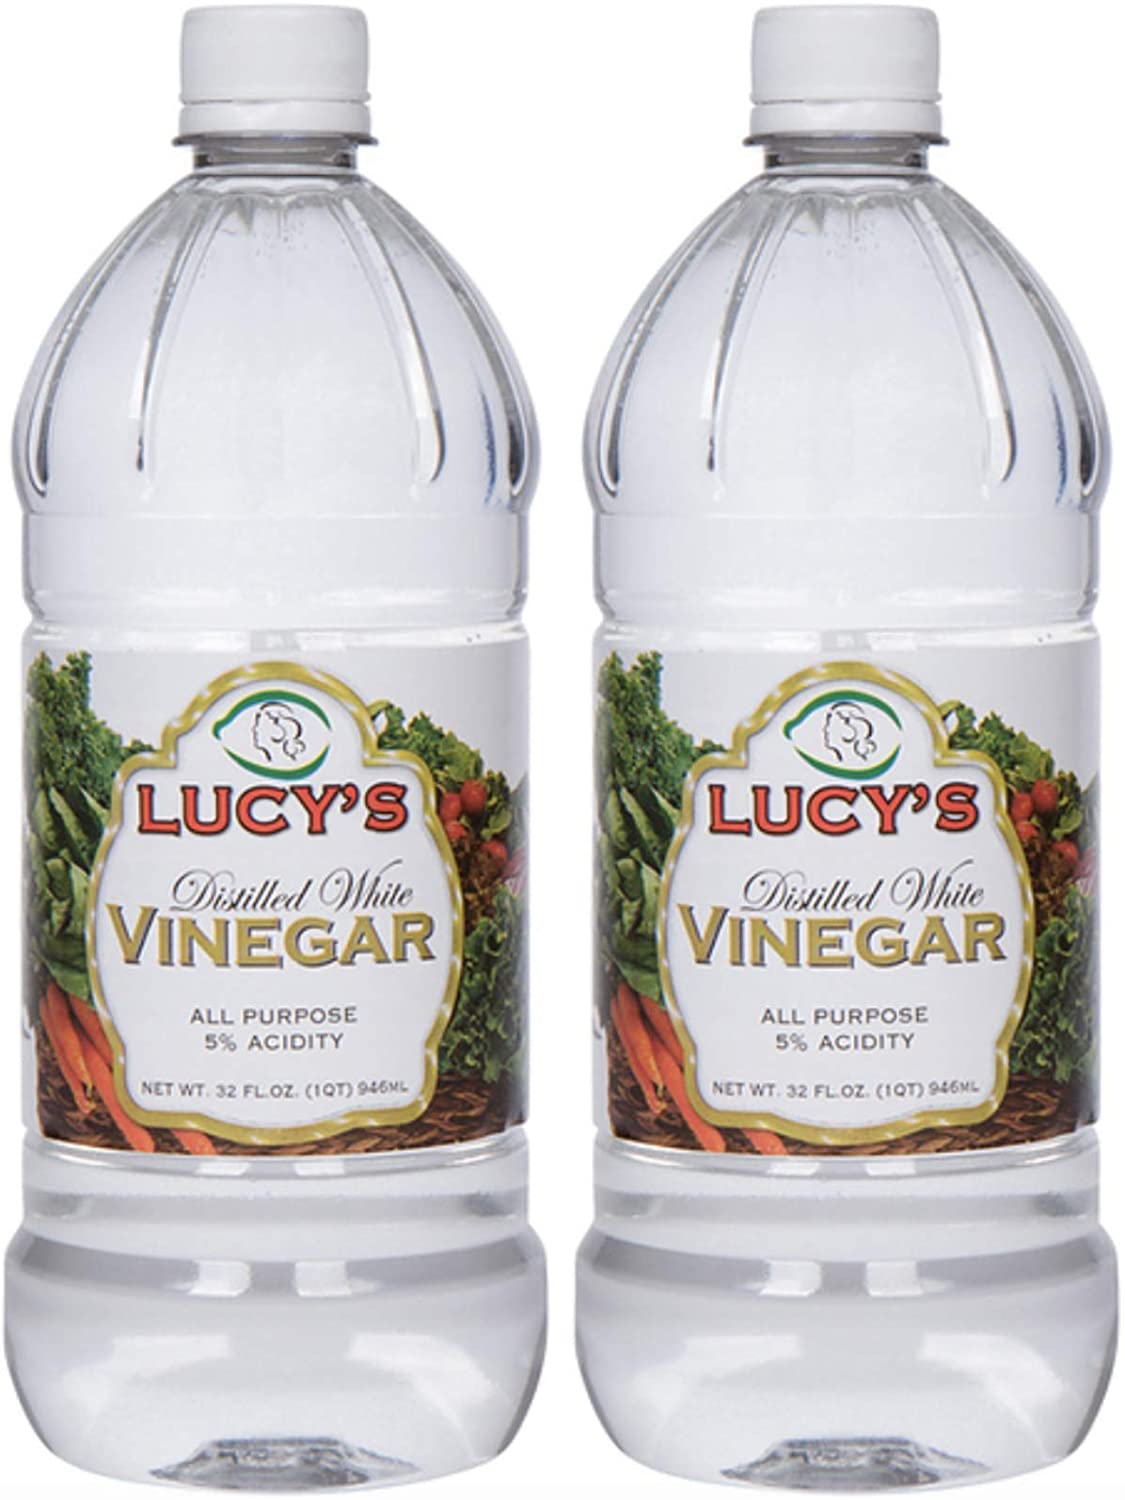 Lucy's Family Owned - Natural Distilled White Vinegar, 32 oz. bottle (Pack of 2)